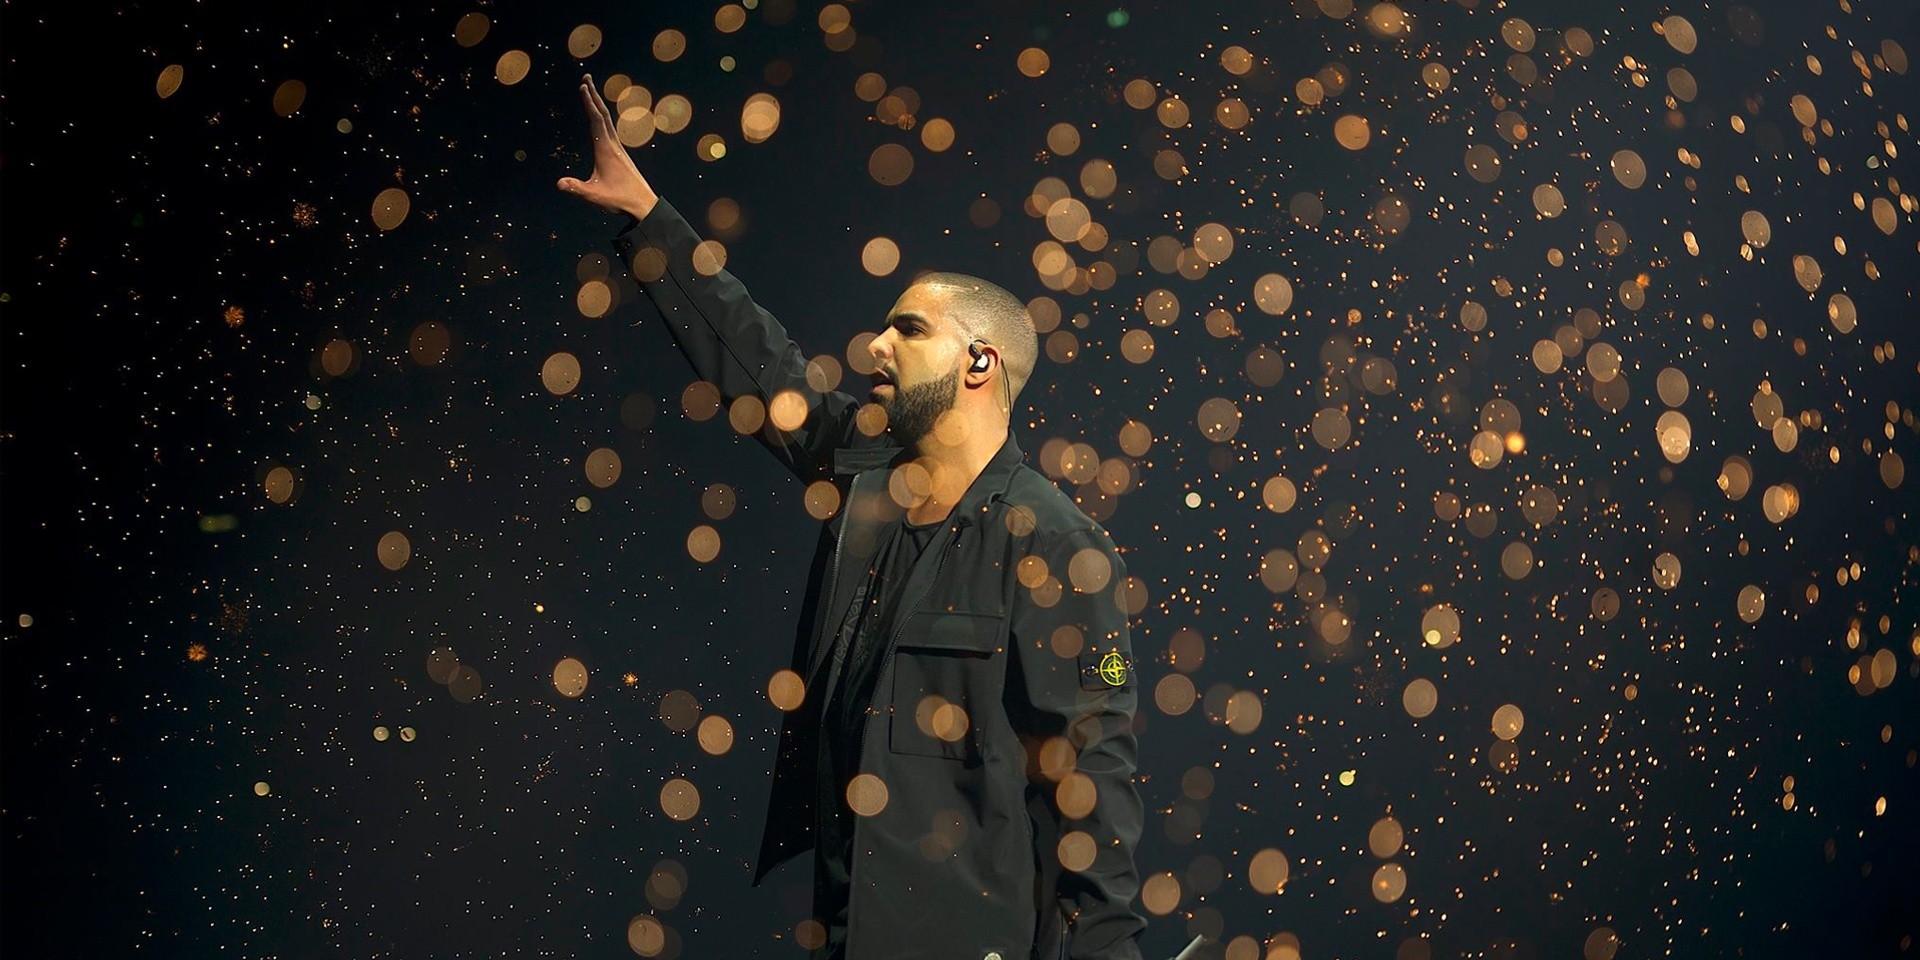 Drake's new album, Scorpion, is streaming now – listen